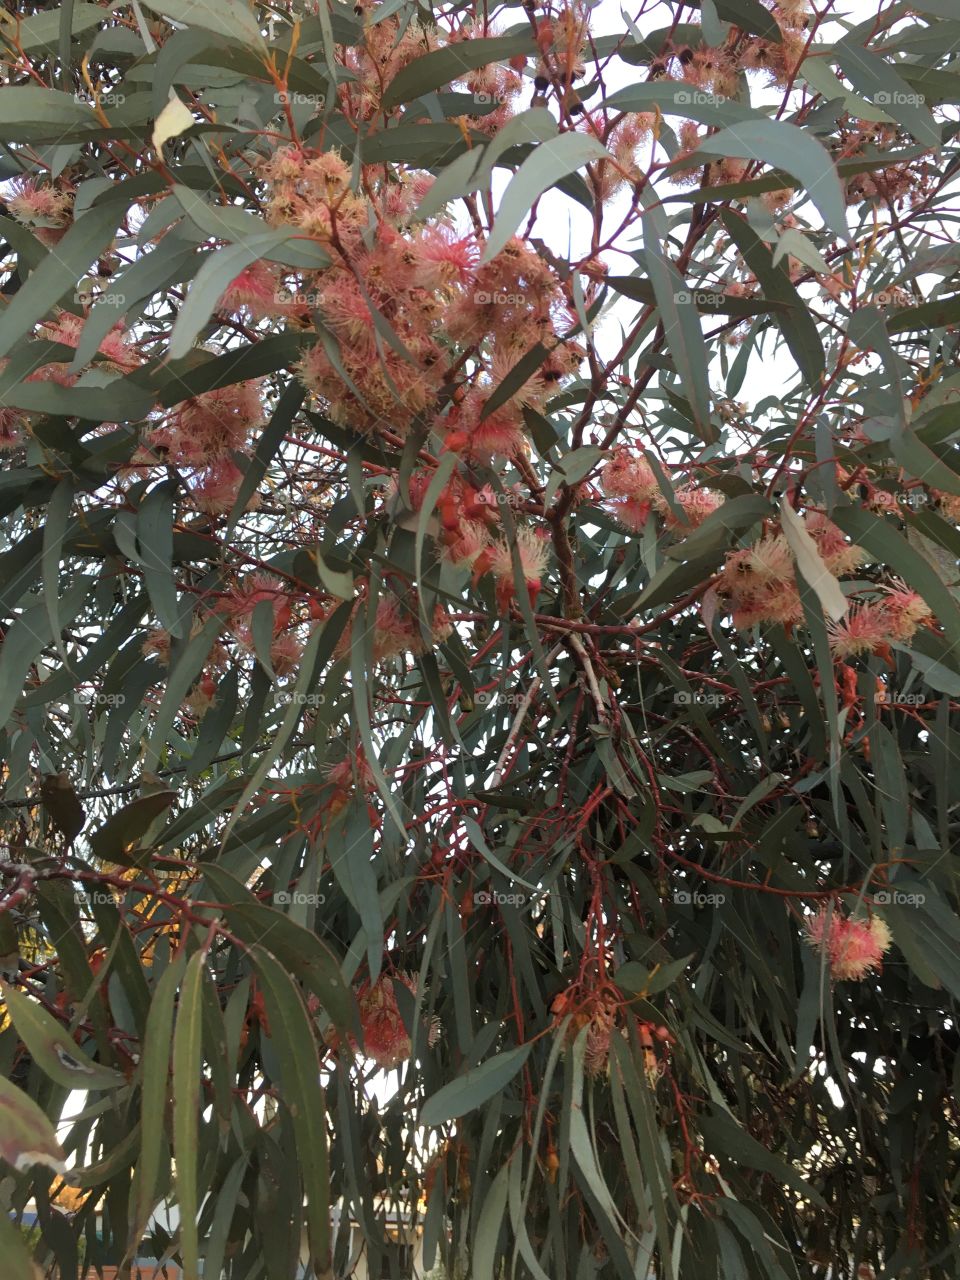 Banksia bush from Australia 